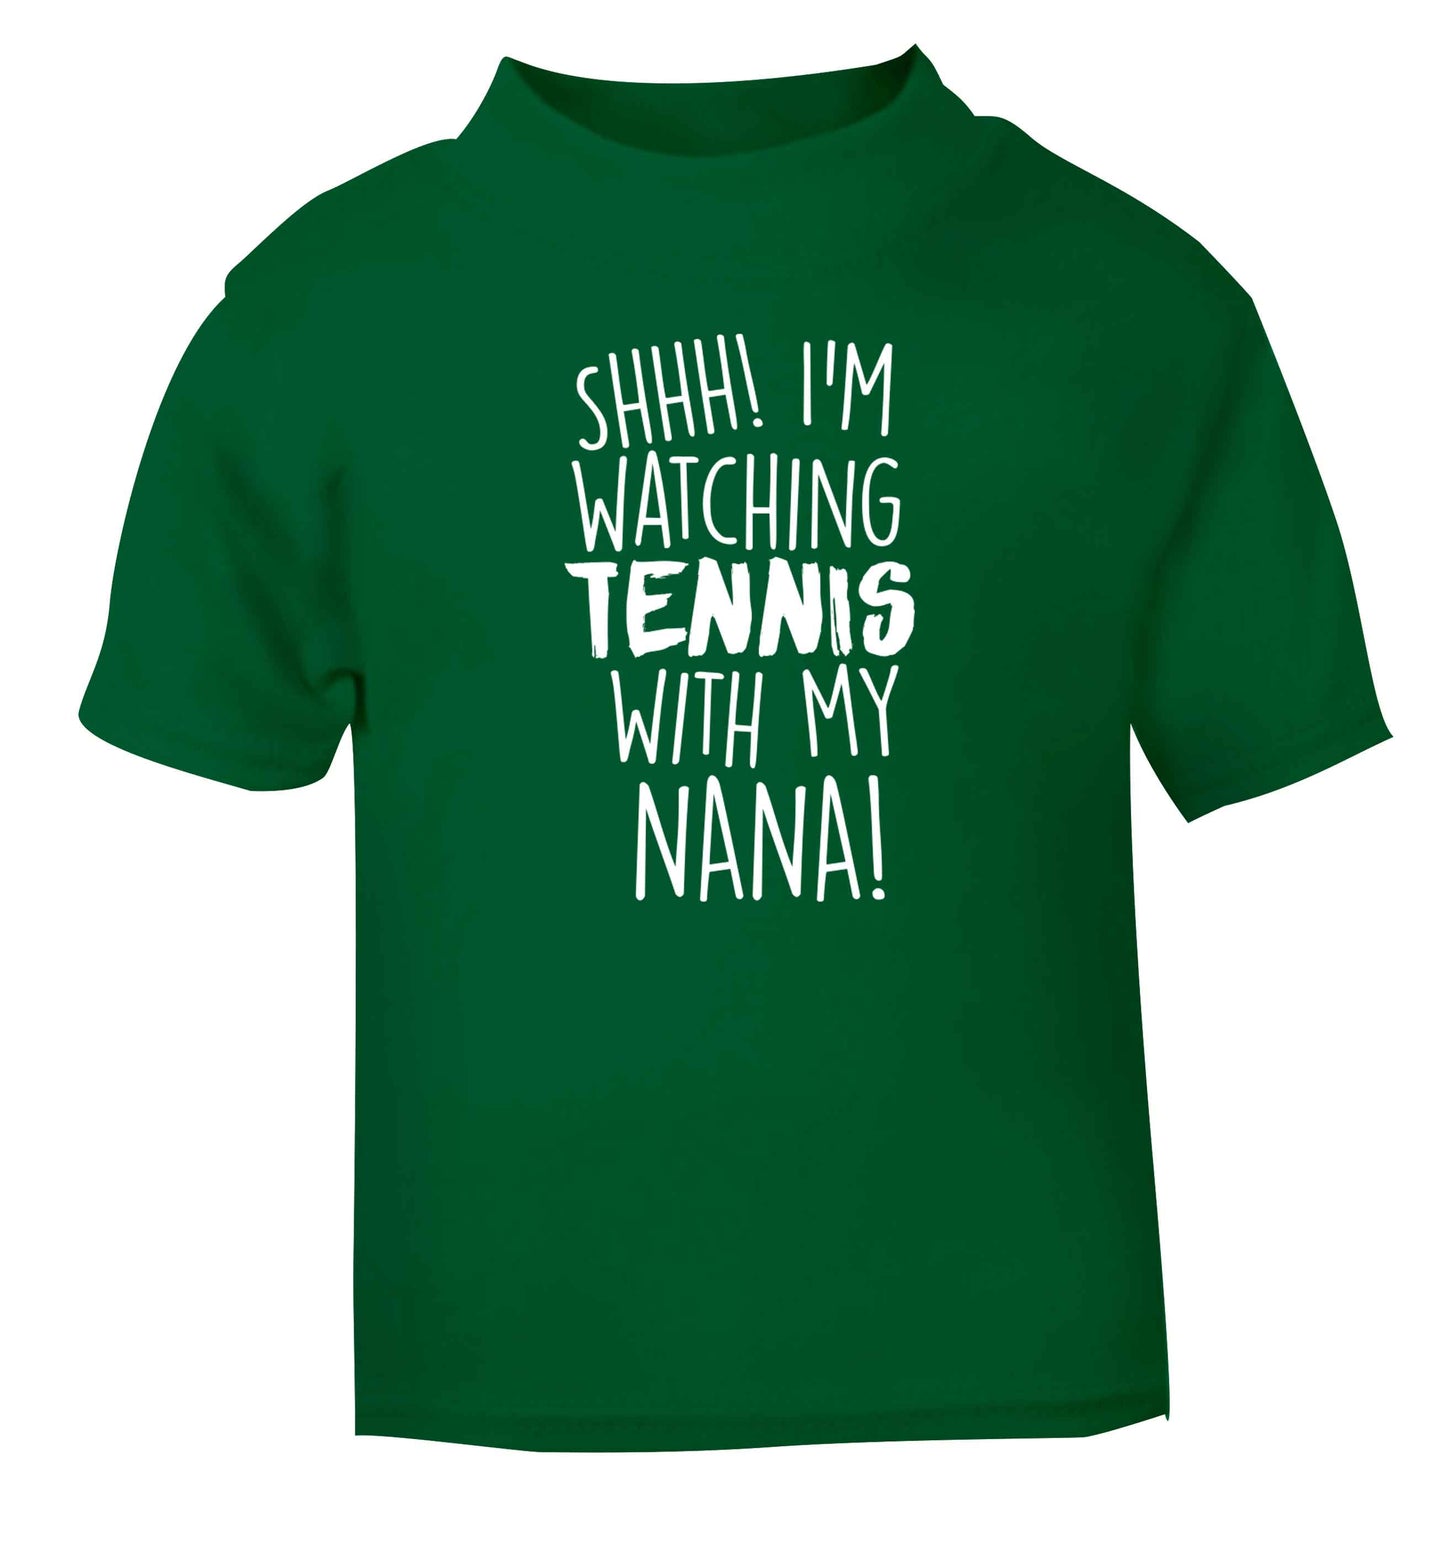 Shh! I'm watching tennis with my nana! green Baby Toddler Tshirt 2 Years